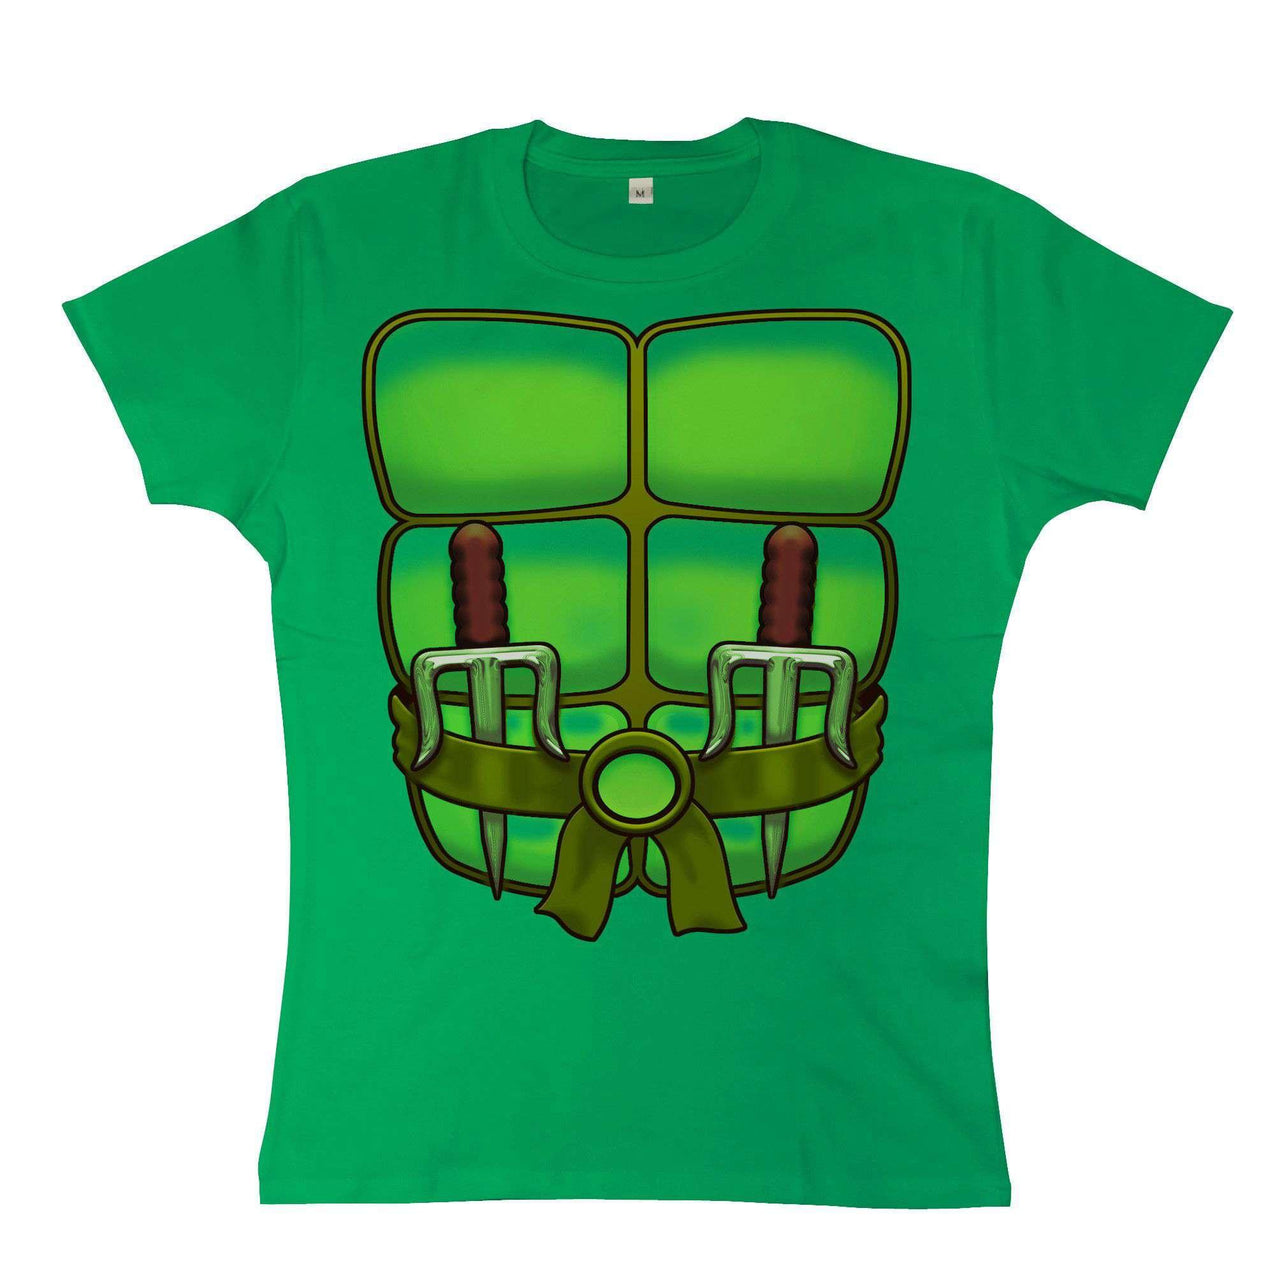 Fancy Dress Ninja Turtle Womens T-Shirt 8Ball